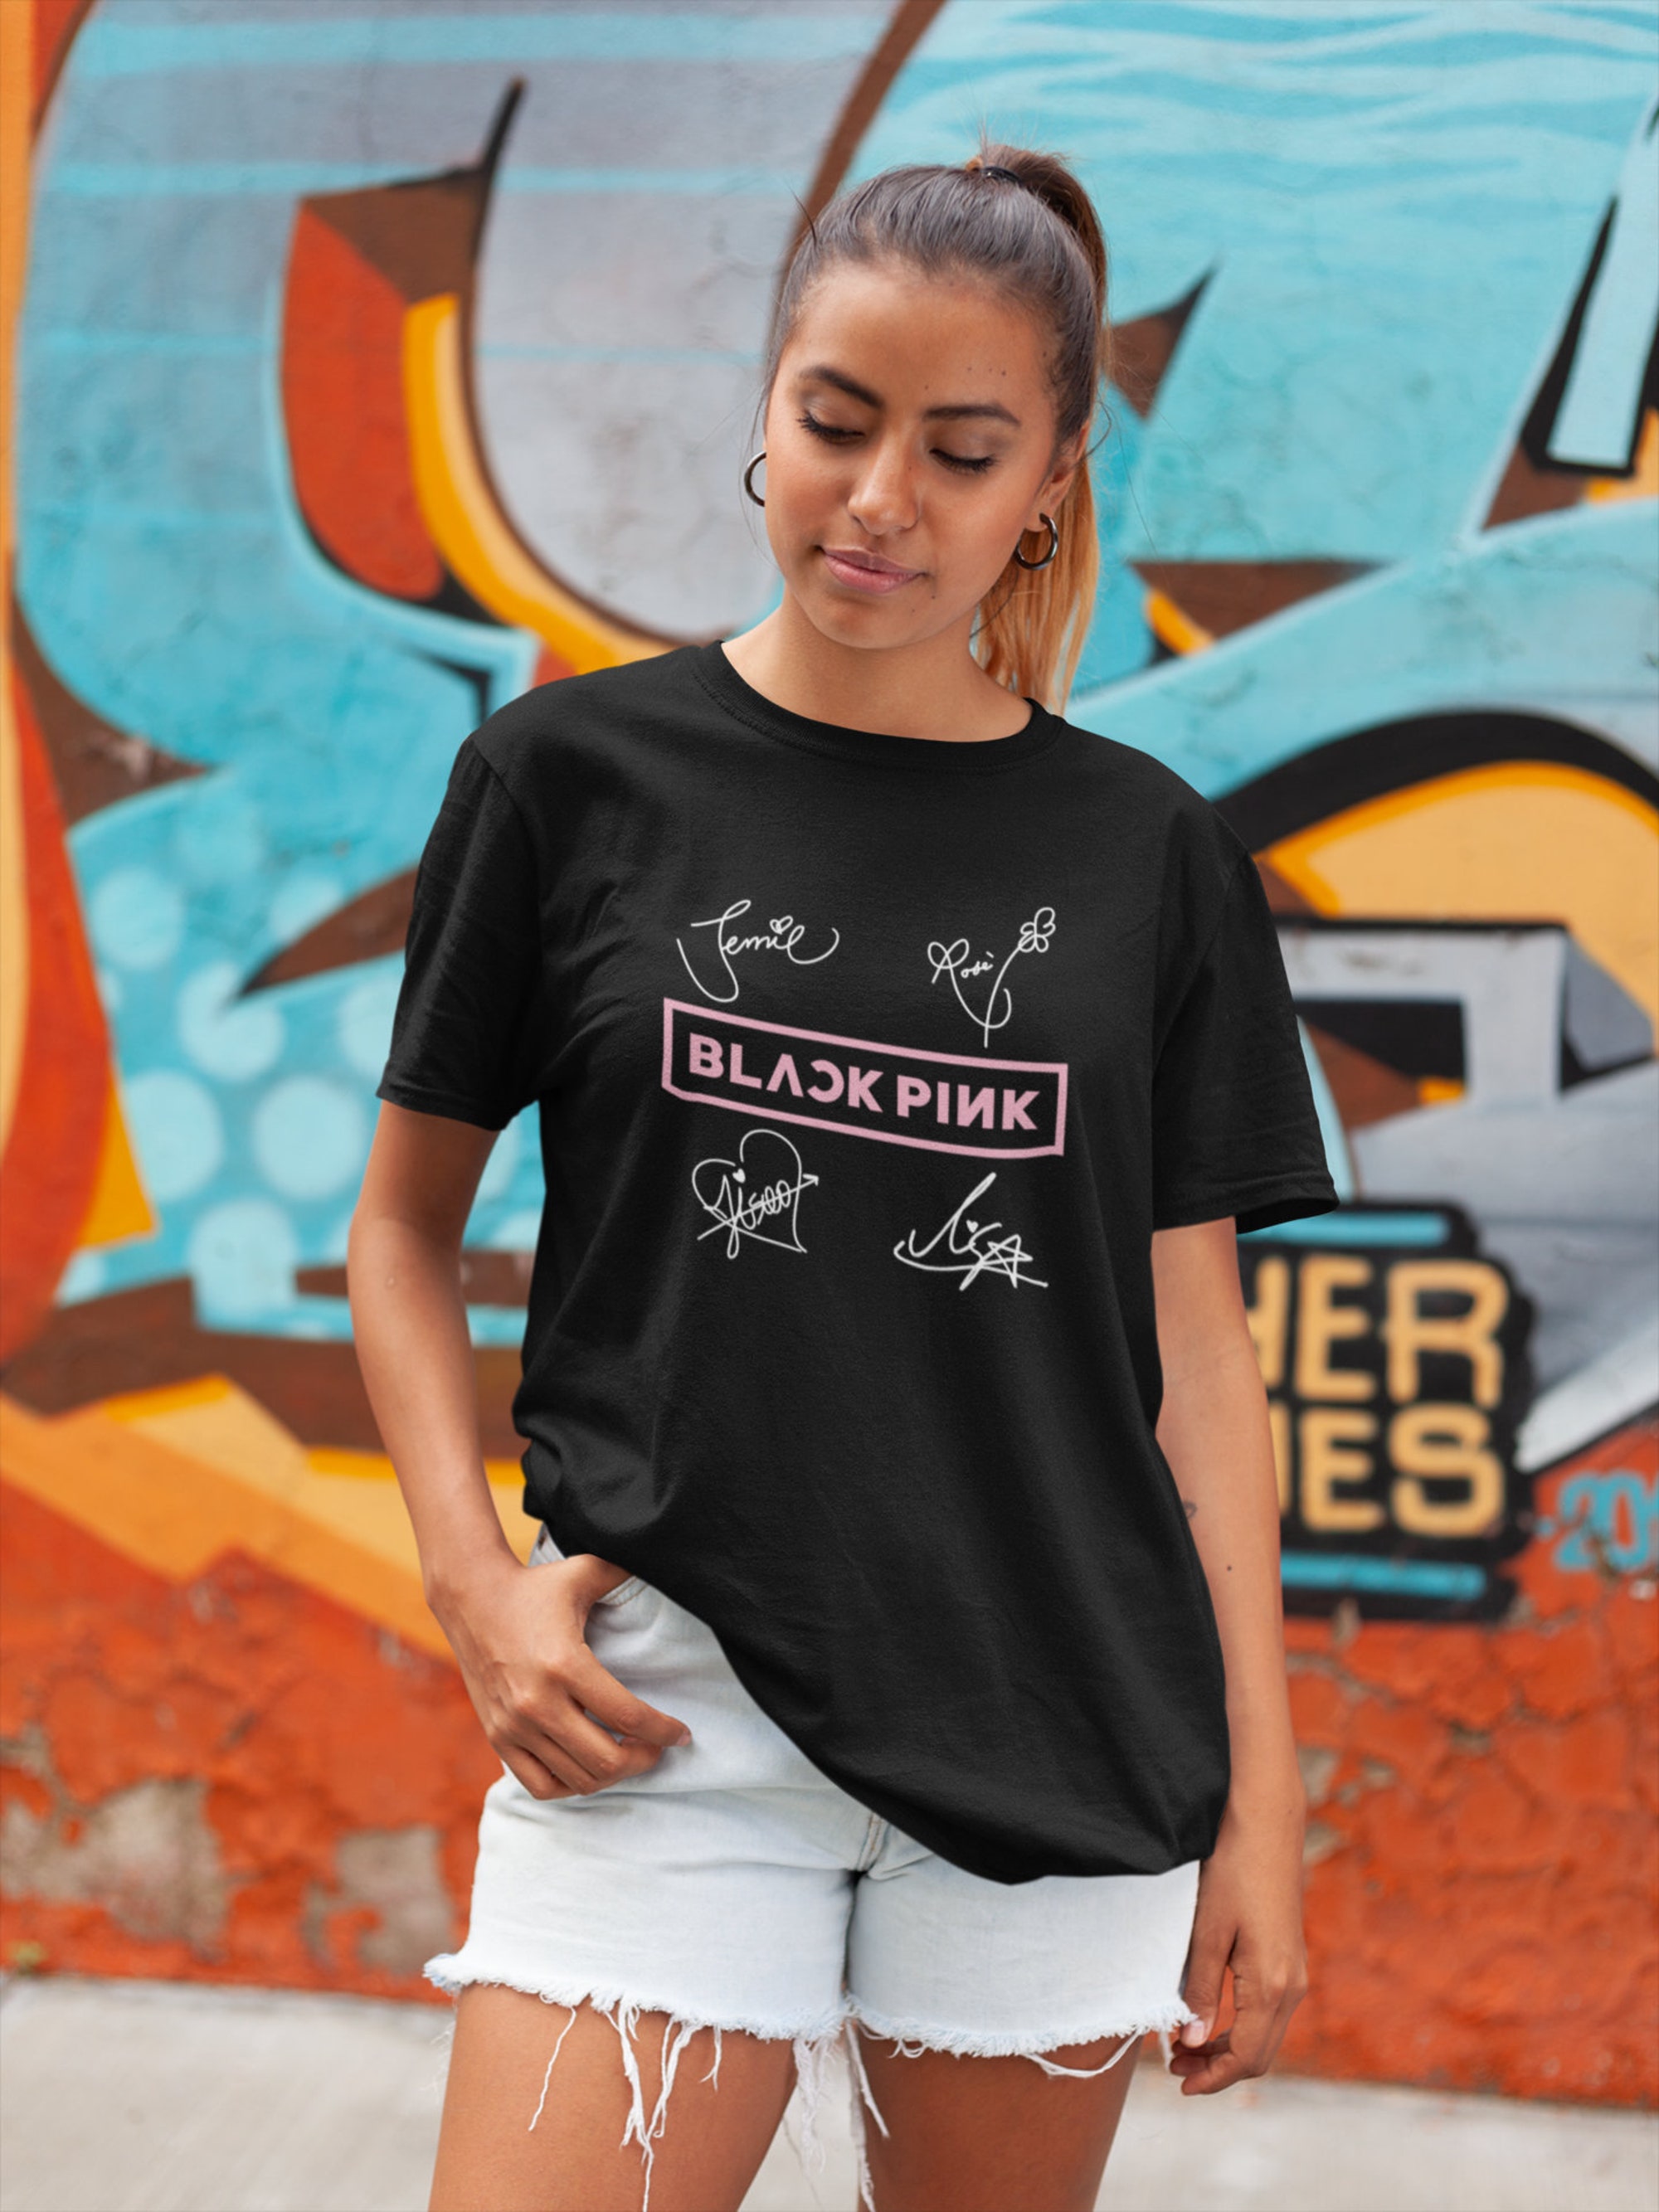 Discover Maglietta T-Shirt Blackpink Per Uomo Donna Bambini - Gruppo Kpop Jennie Lisa Rose Jisoo